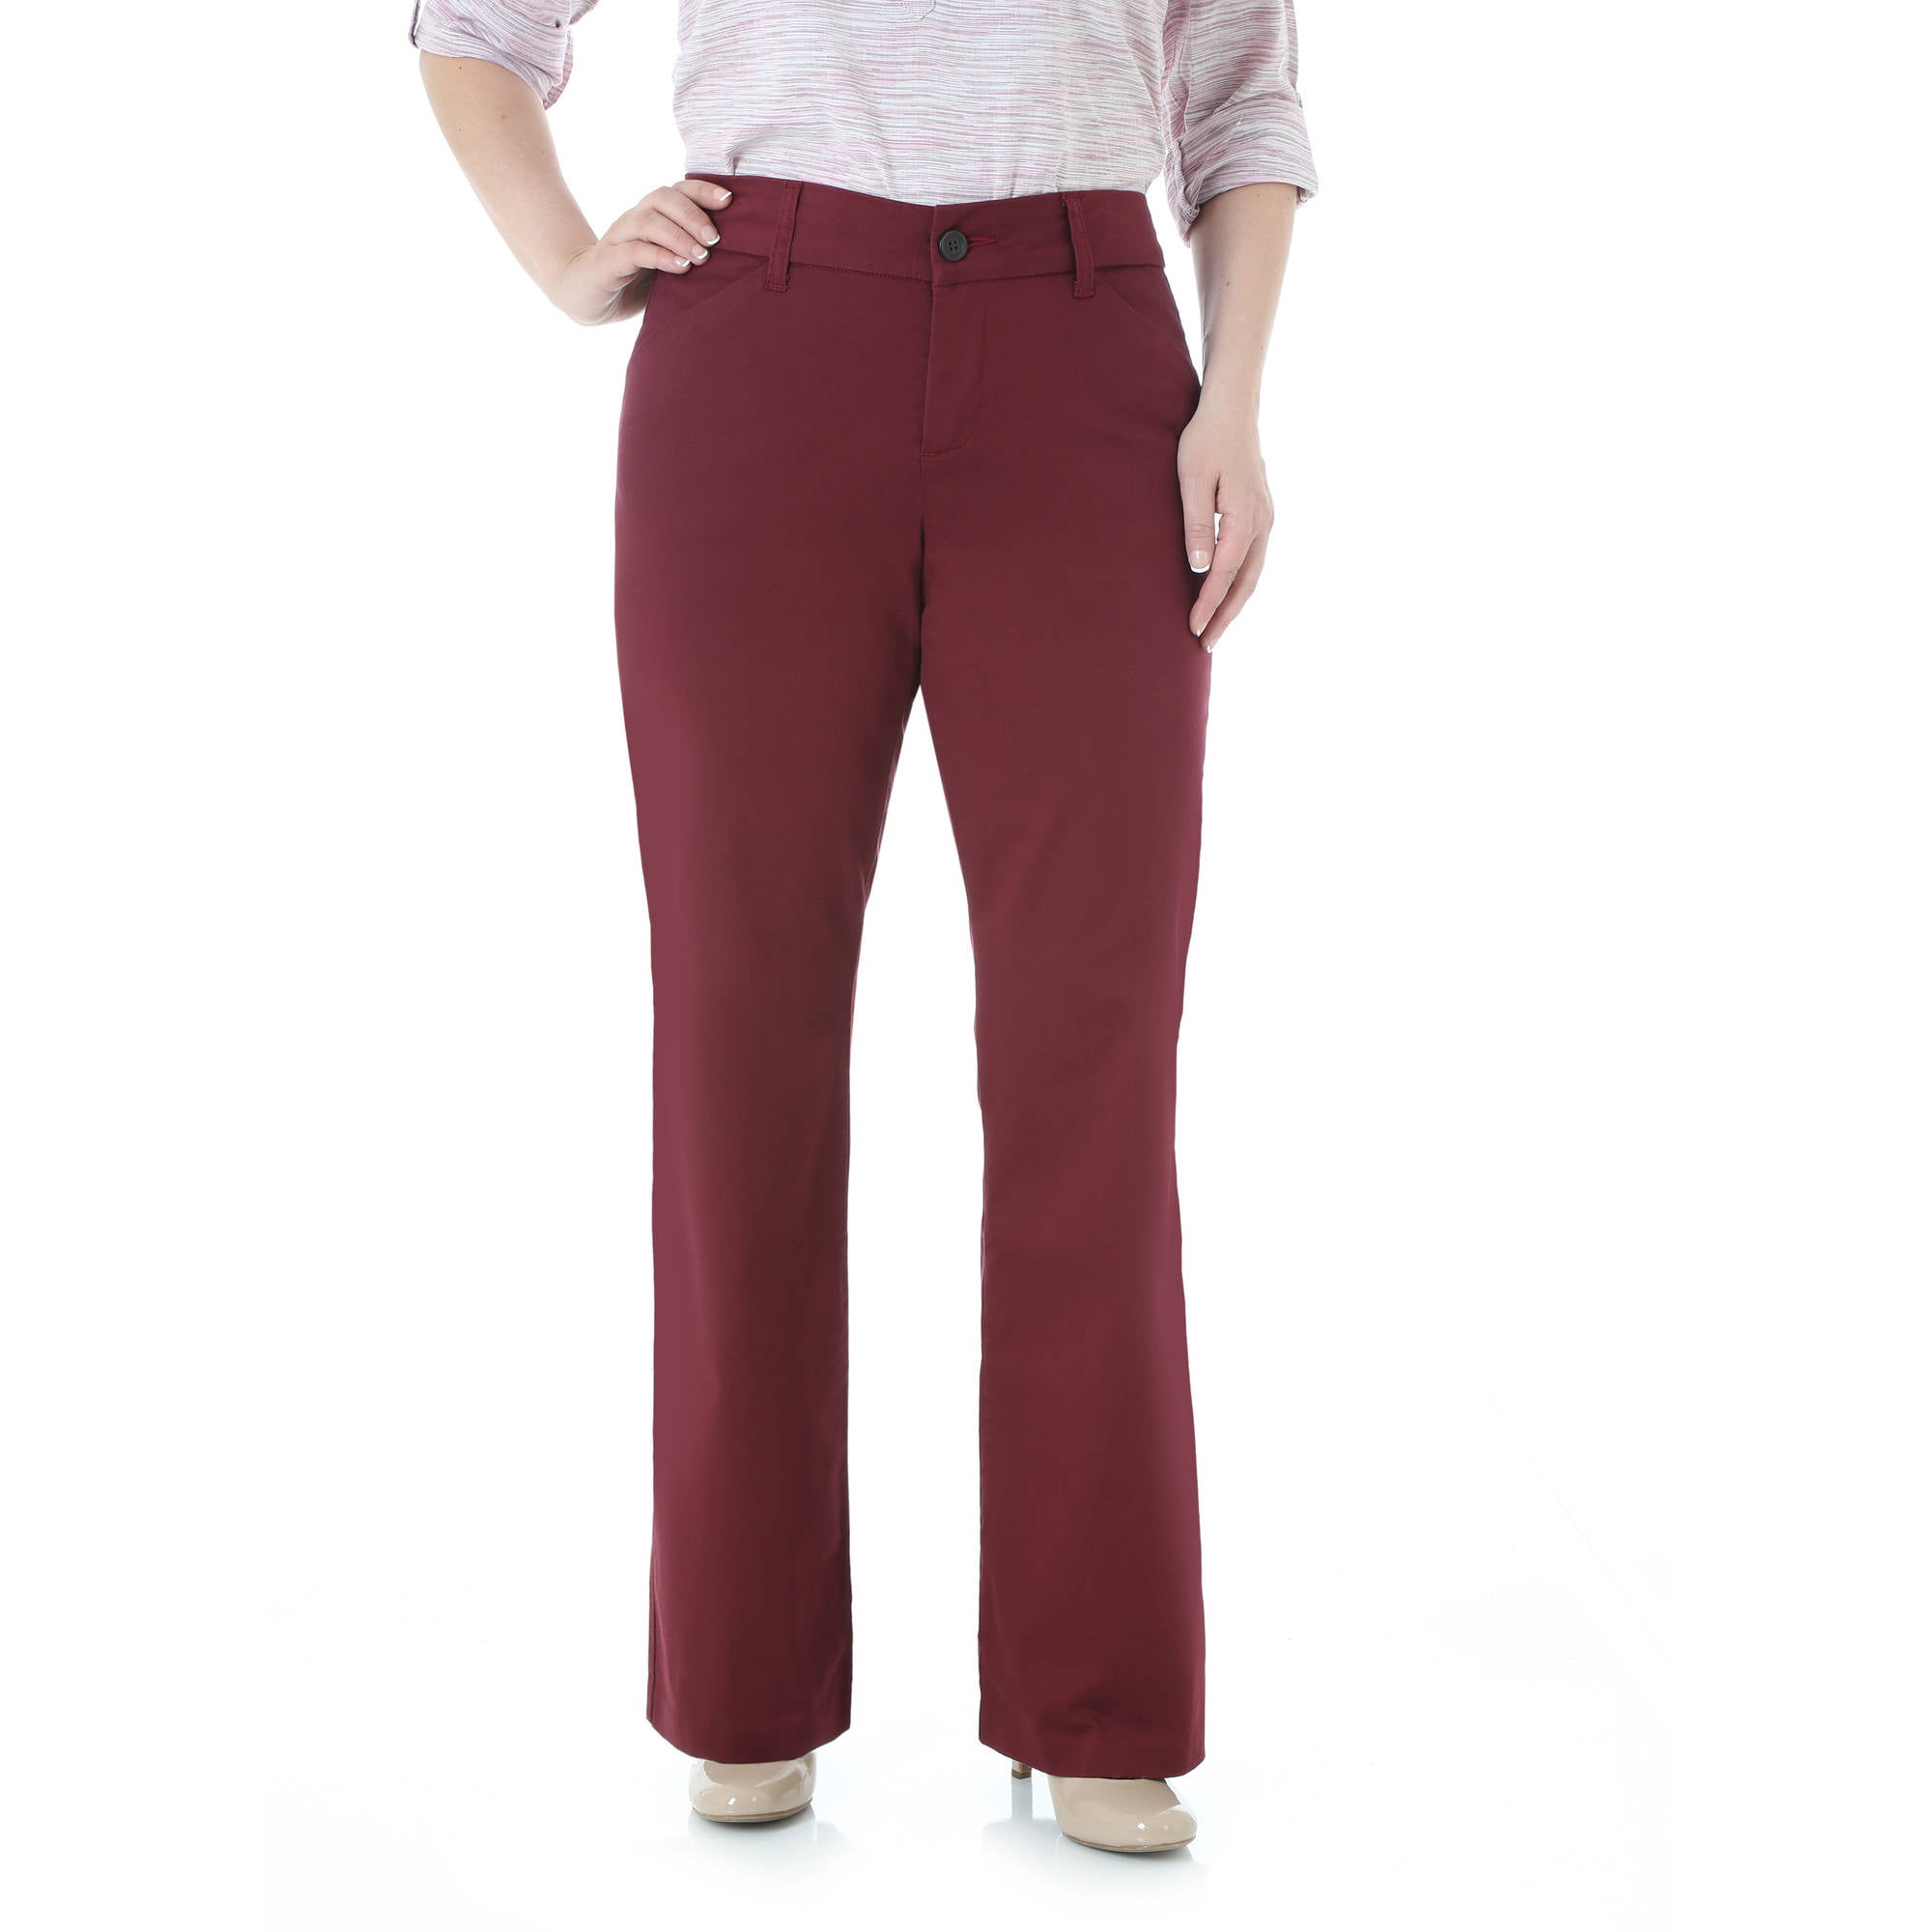 Women's Casual Curvy Trouser Pant - Walmart.com